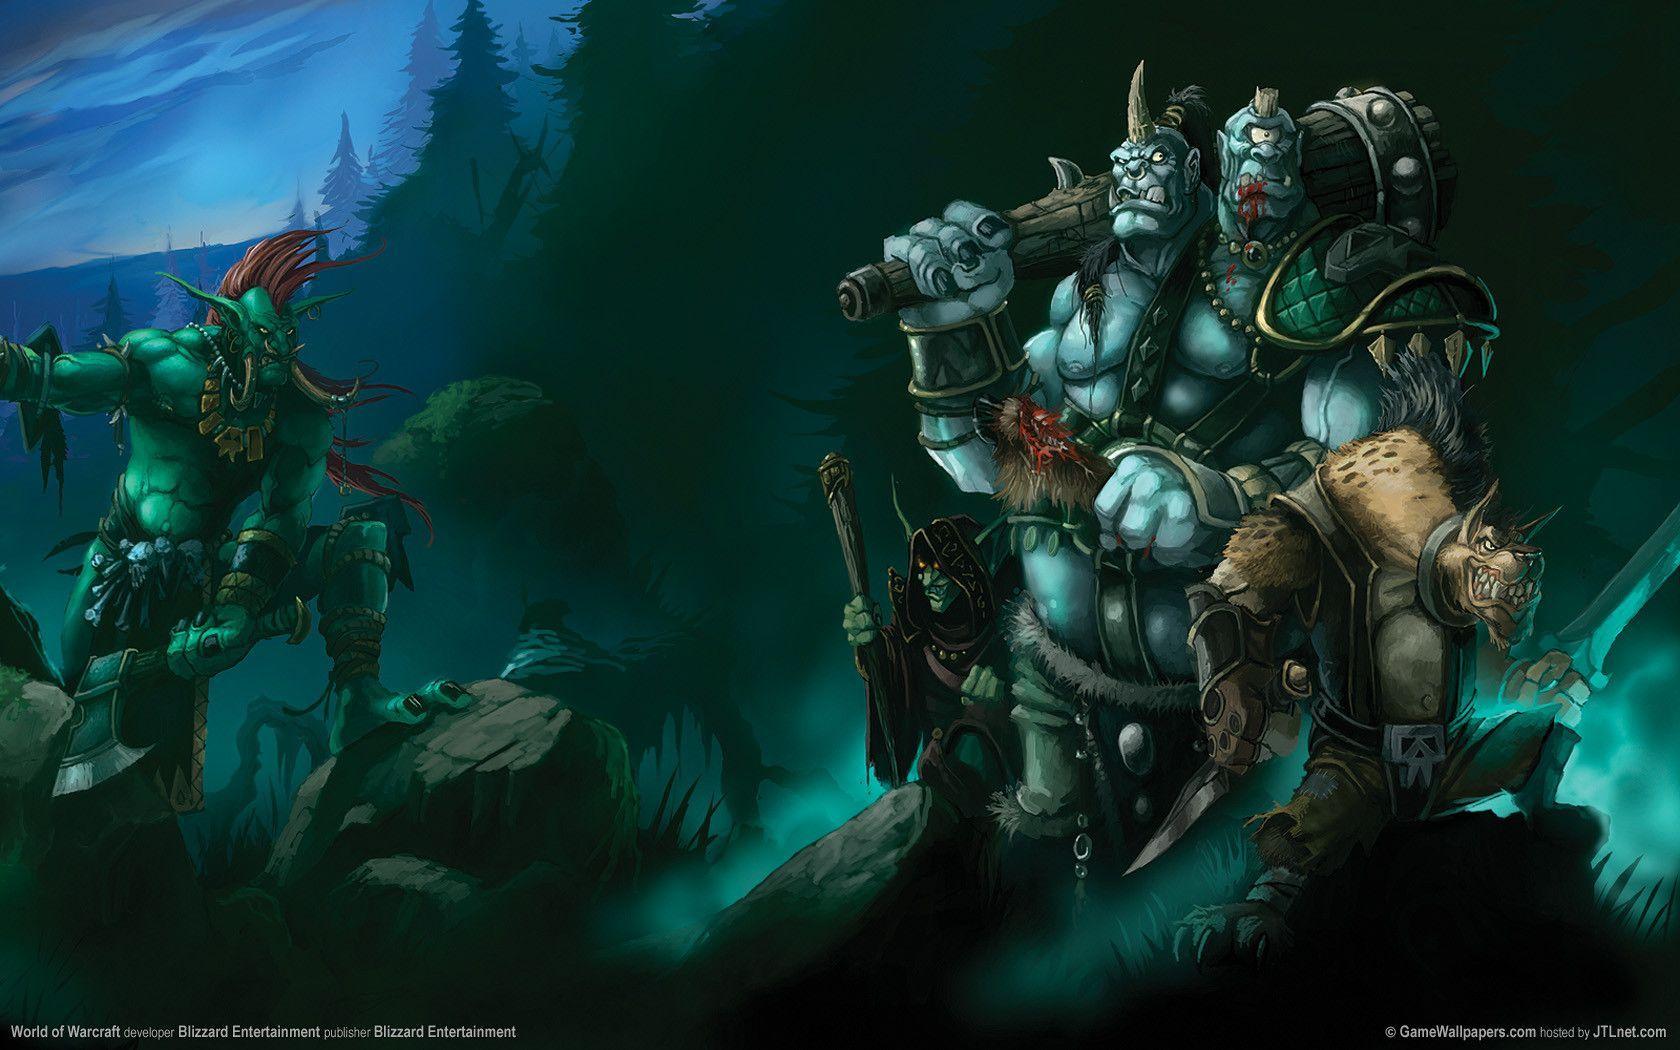 World of Warcraft wallpaper. World of Warcraft background